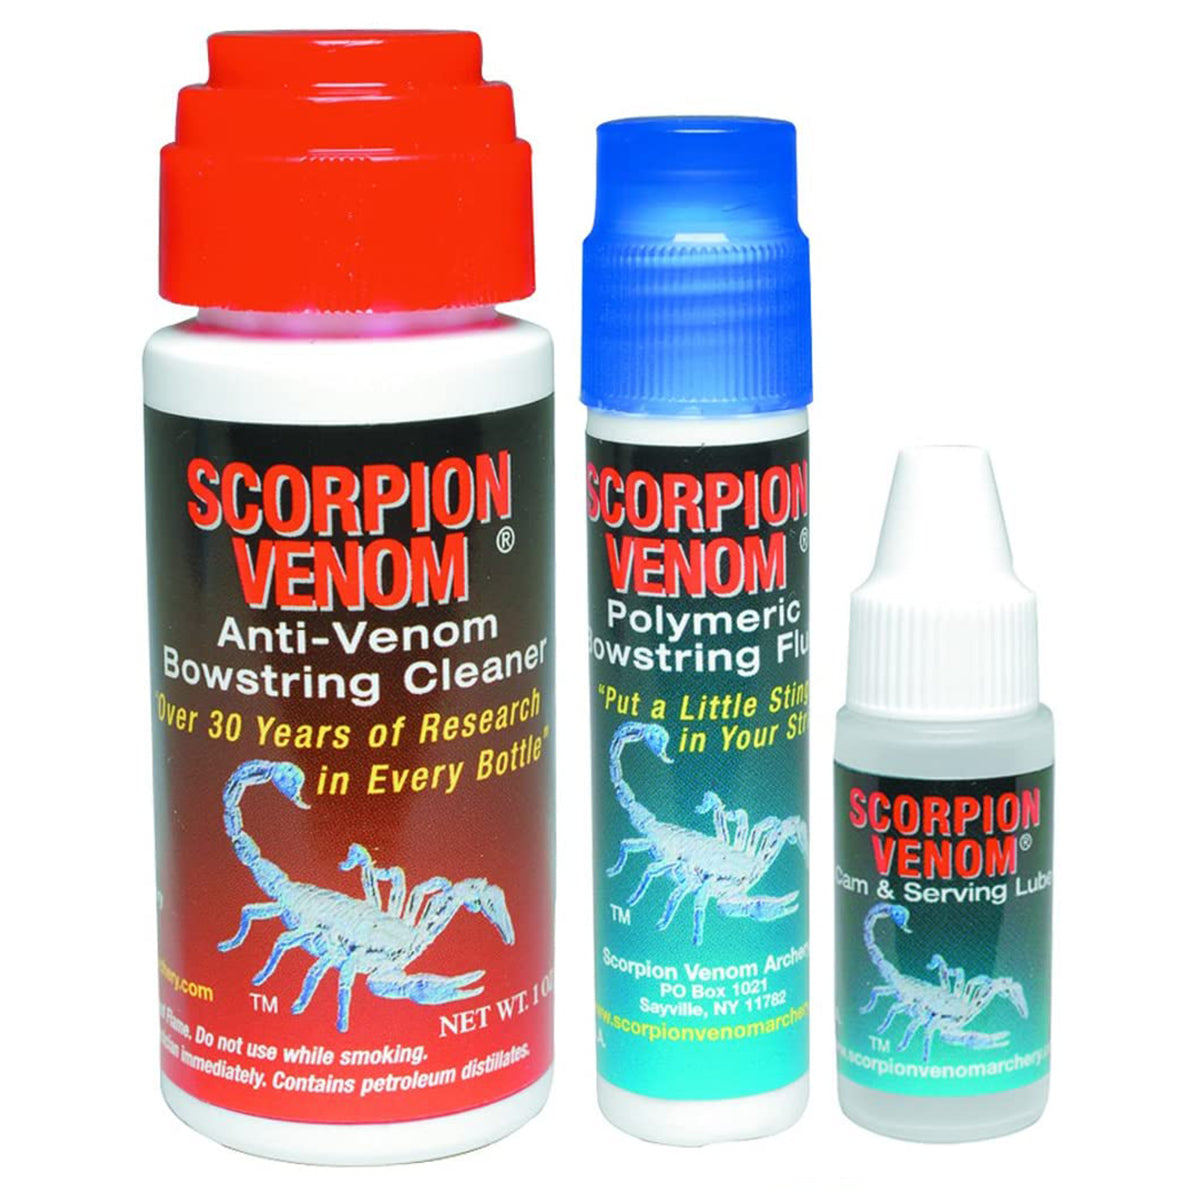 Scorpion Venom 3 Star Maintenance Kit in Scorpion Venom 3 Star Maintenance Kit by Scorpion Venom Archery | Archery - goHUNT Shop by GOHUNT | Scorpion Venom Archery - GOHUNT Shop